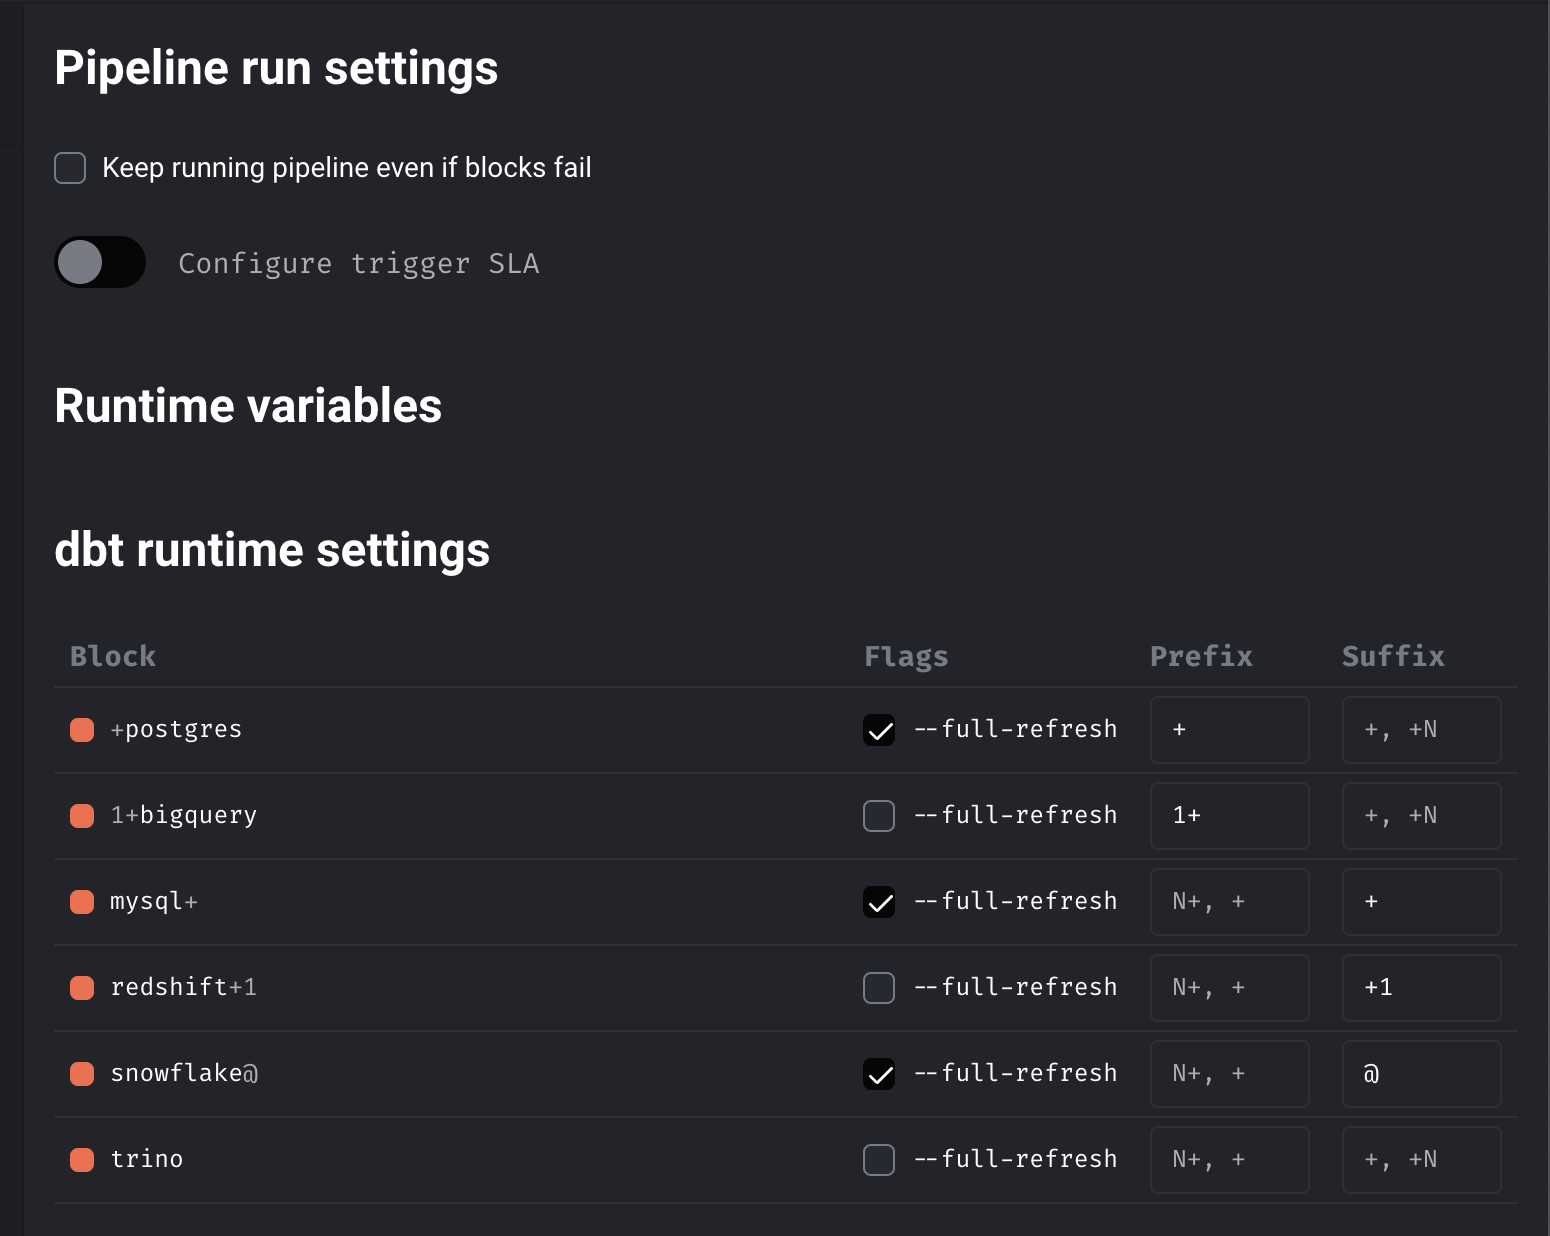 dbt runtime settings